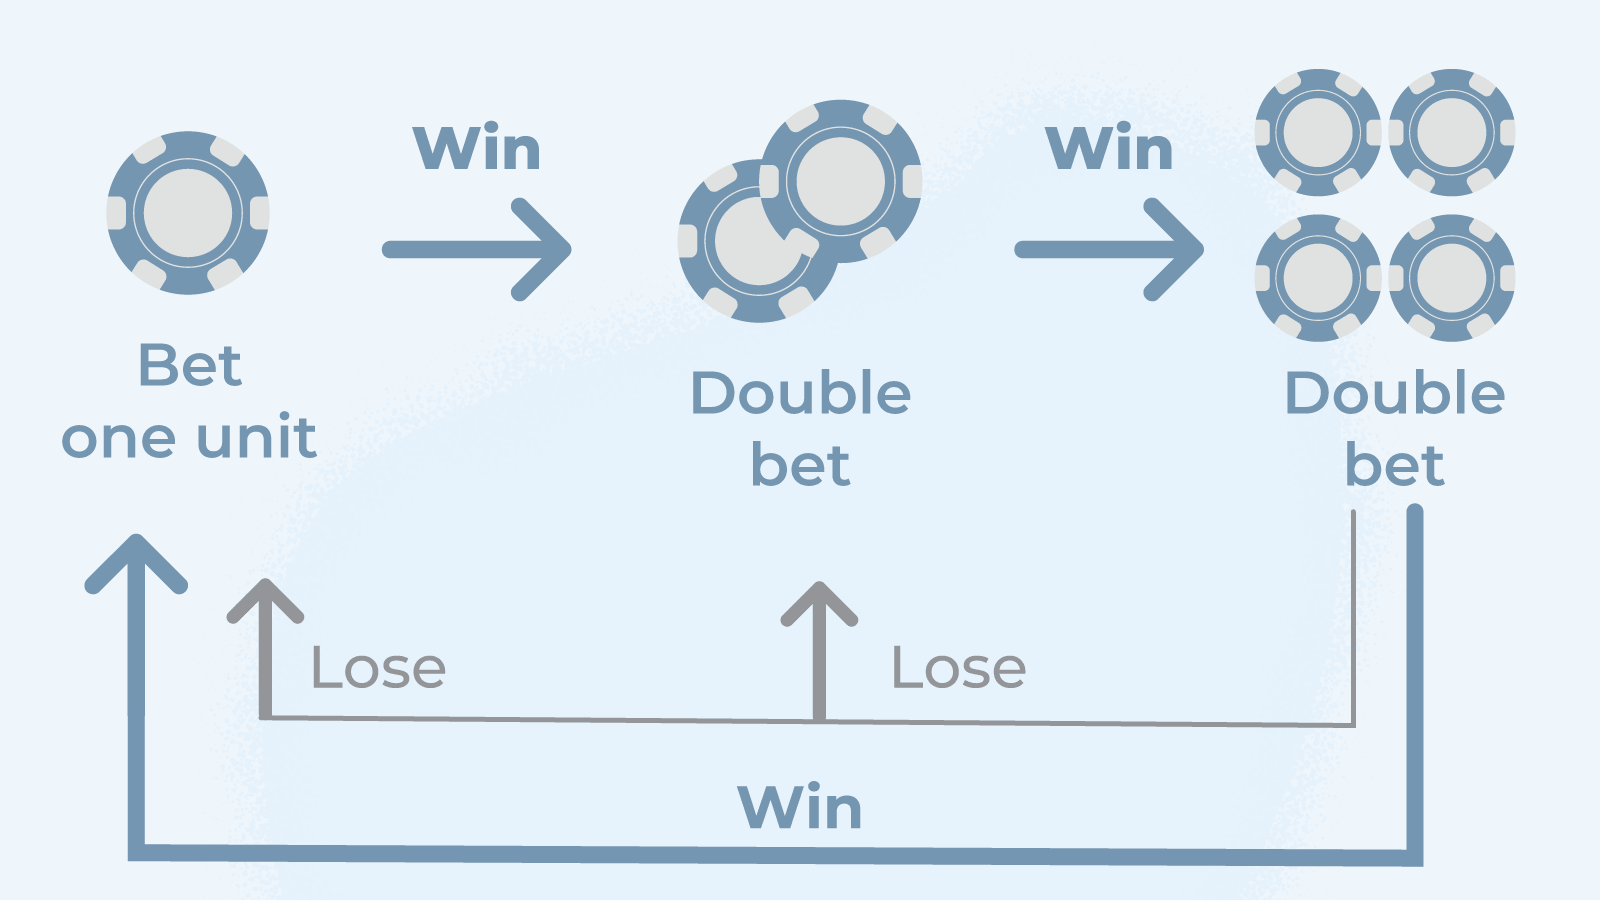 The Paroli betting system explained